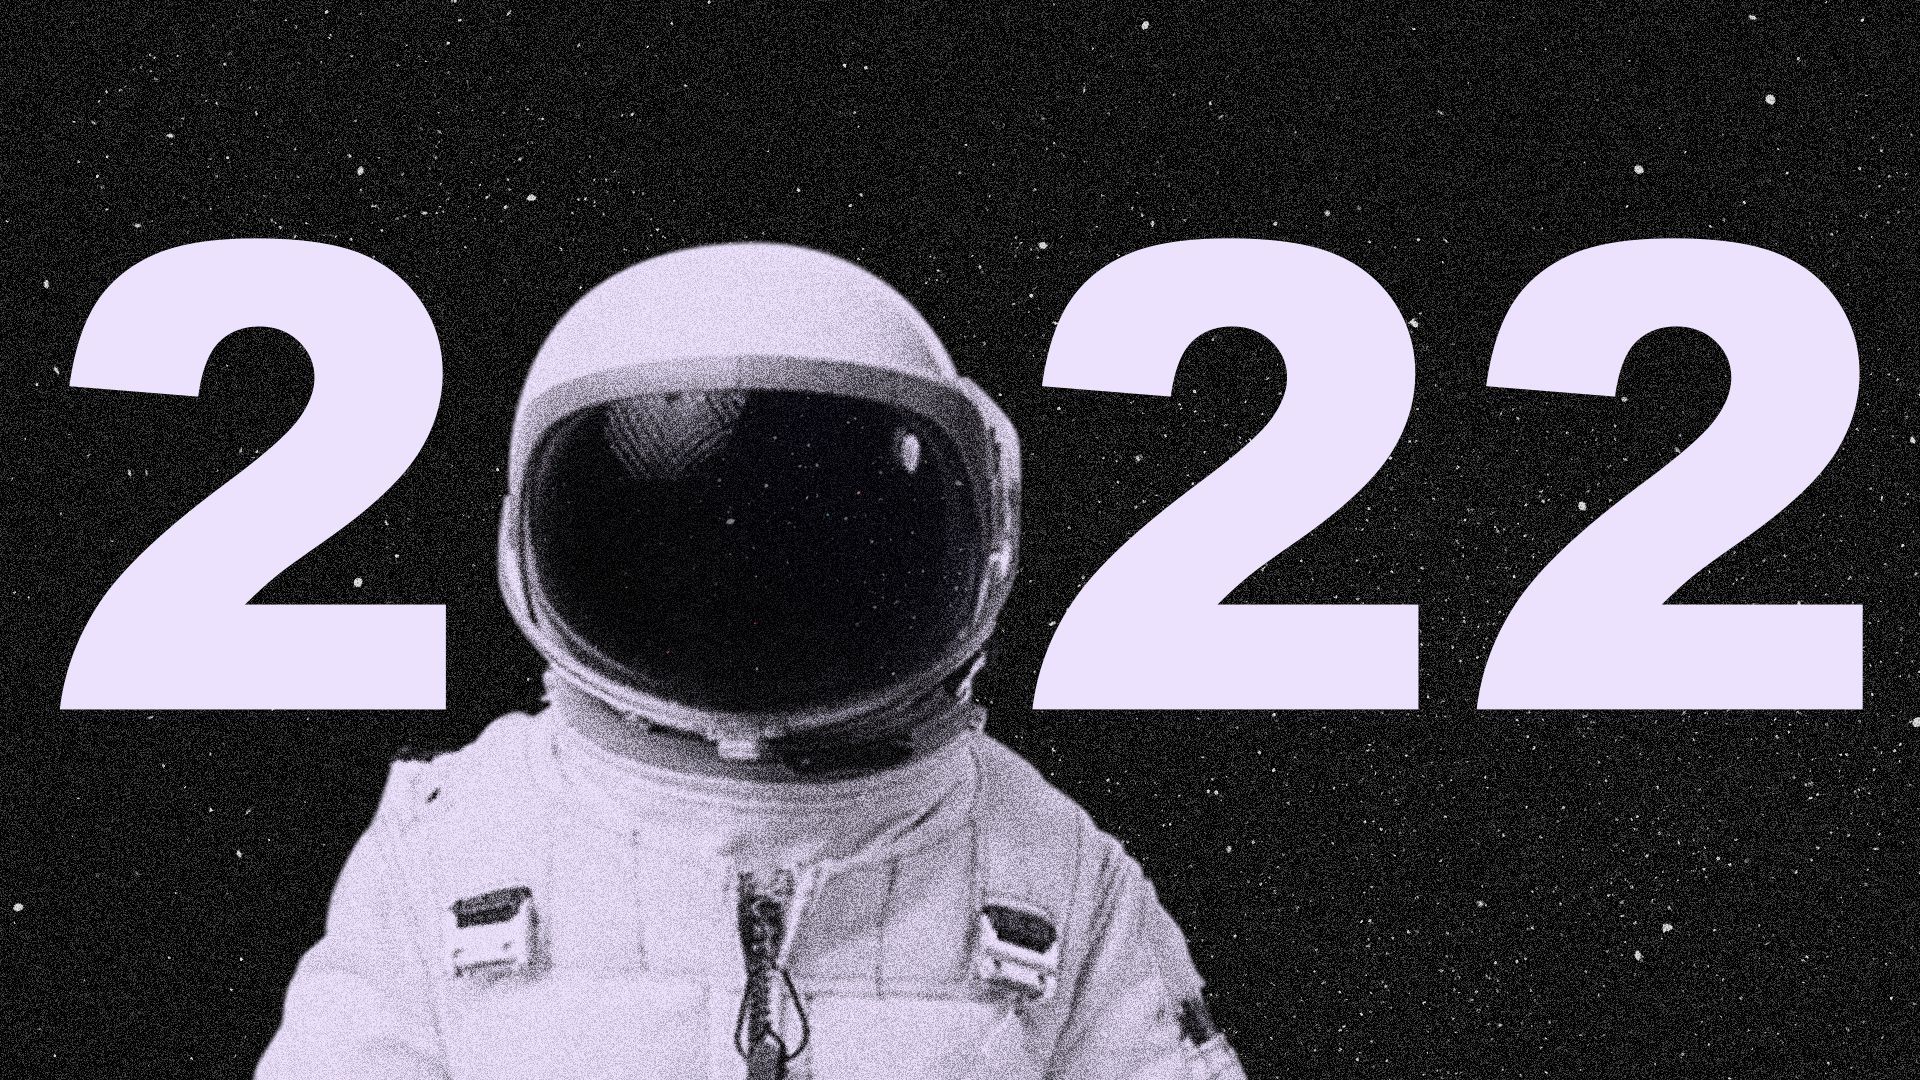 Illustration of an astronaut helmet forming the zero in 2022. 